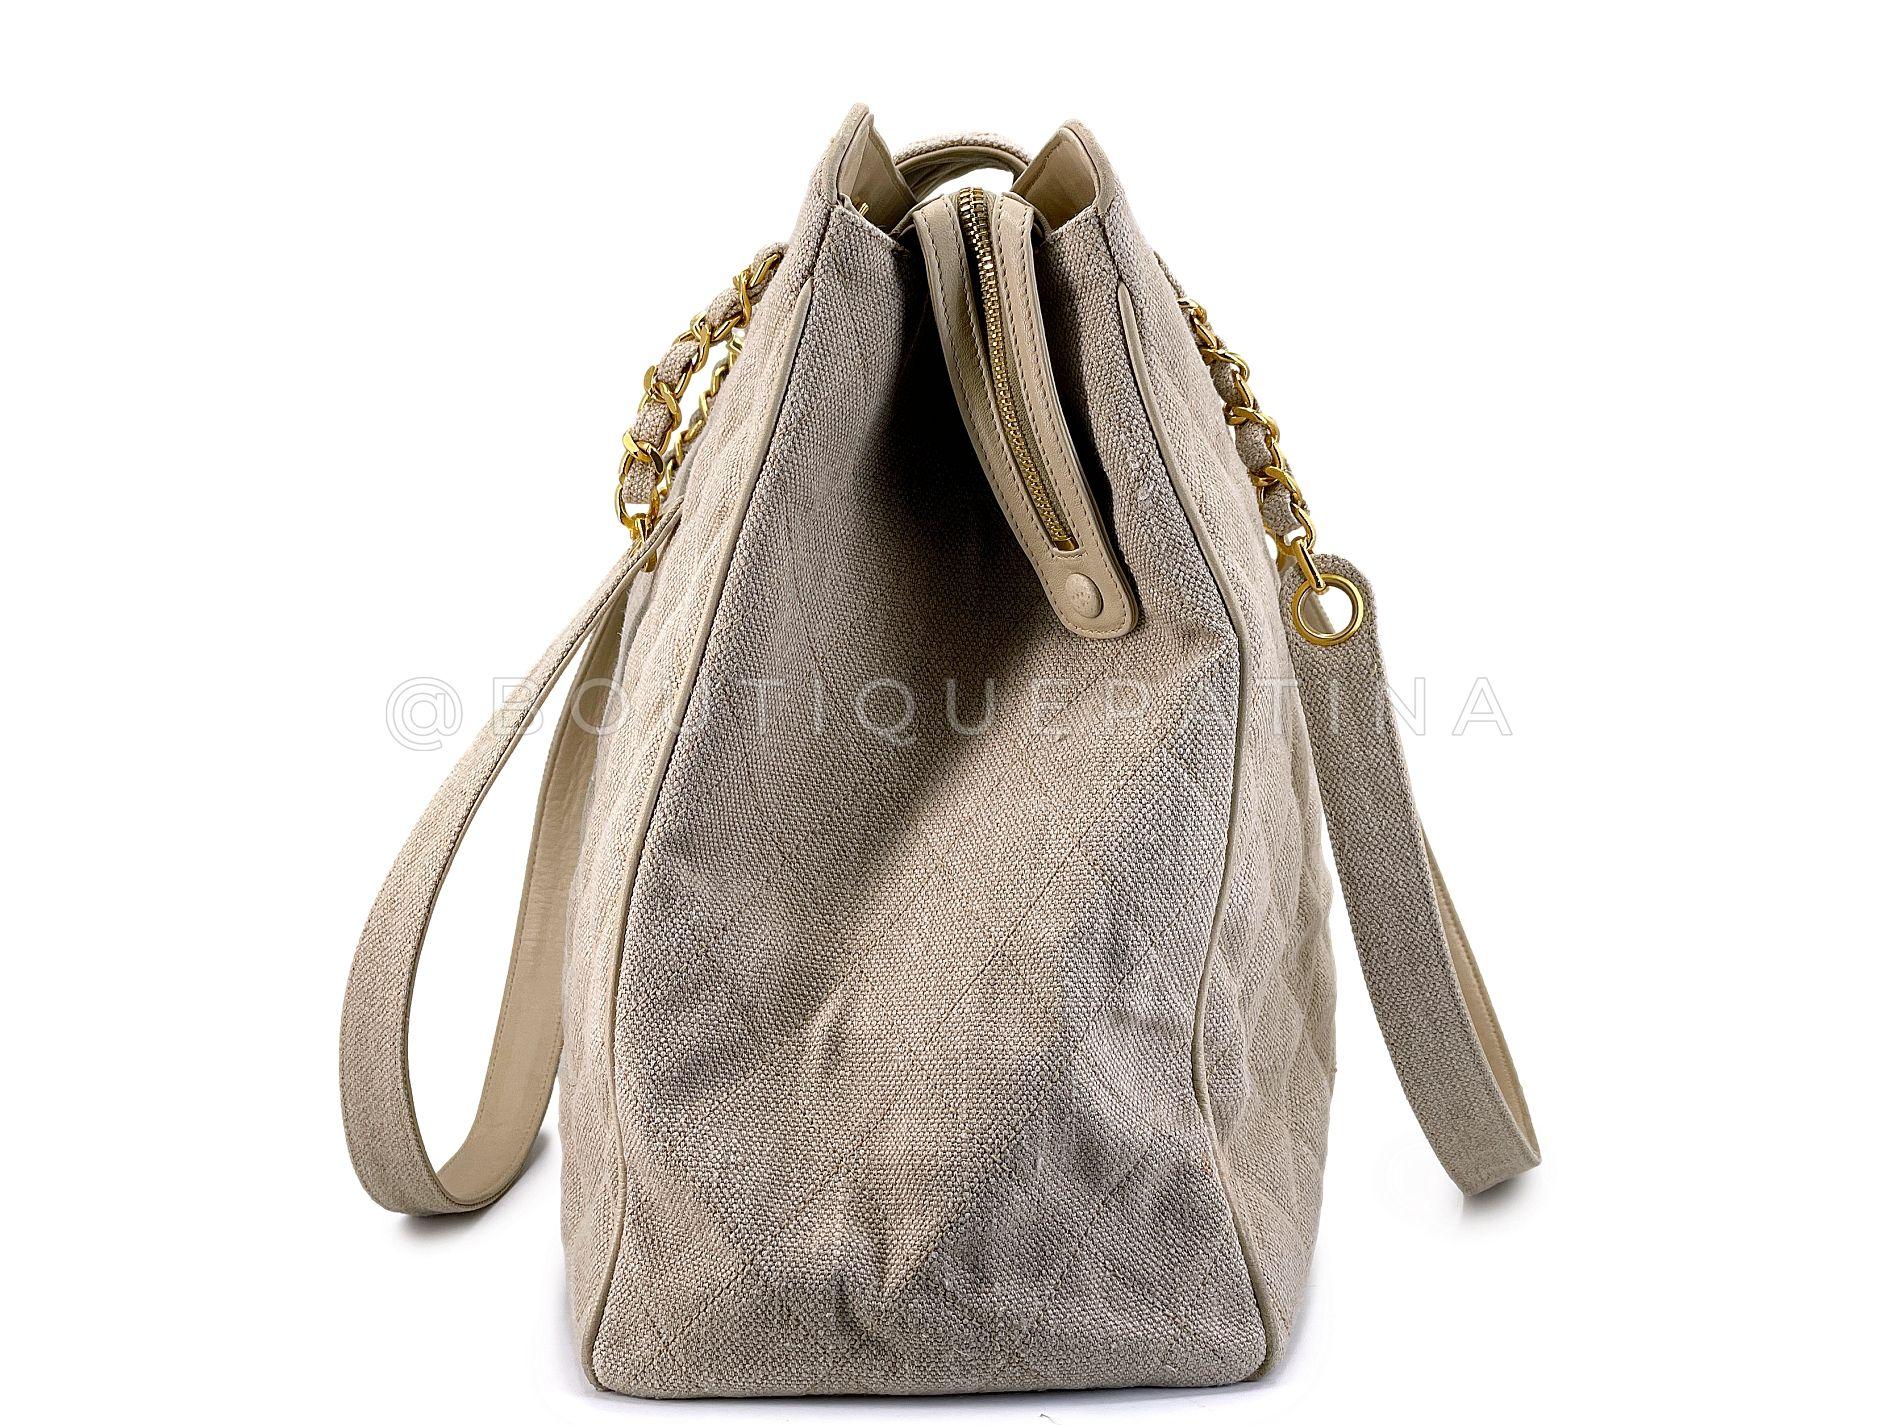 Women's Chanel Vintage Supermodel Taupe Beige Linen XL Weekender Tote Bag 24k GHW 68015